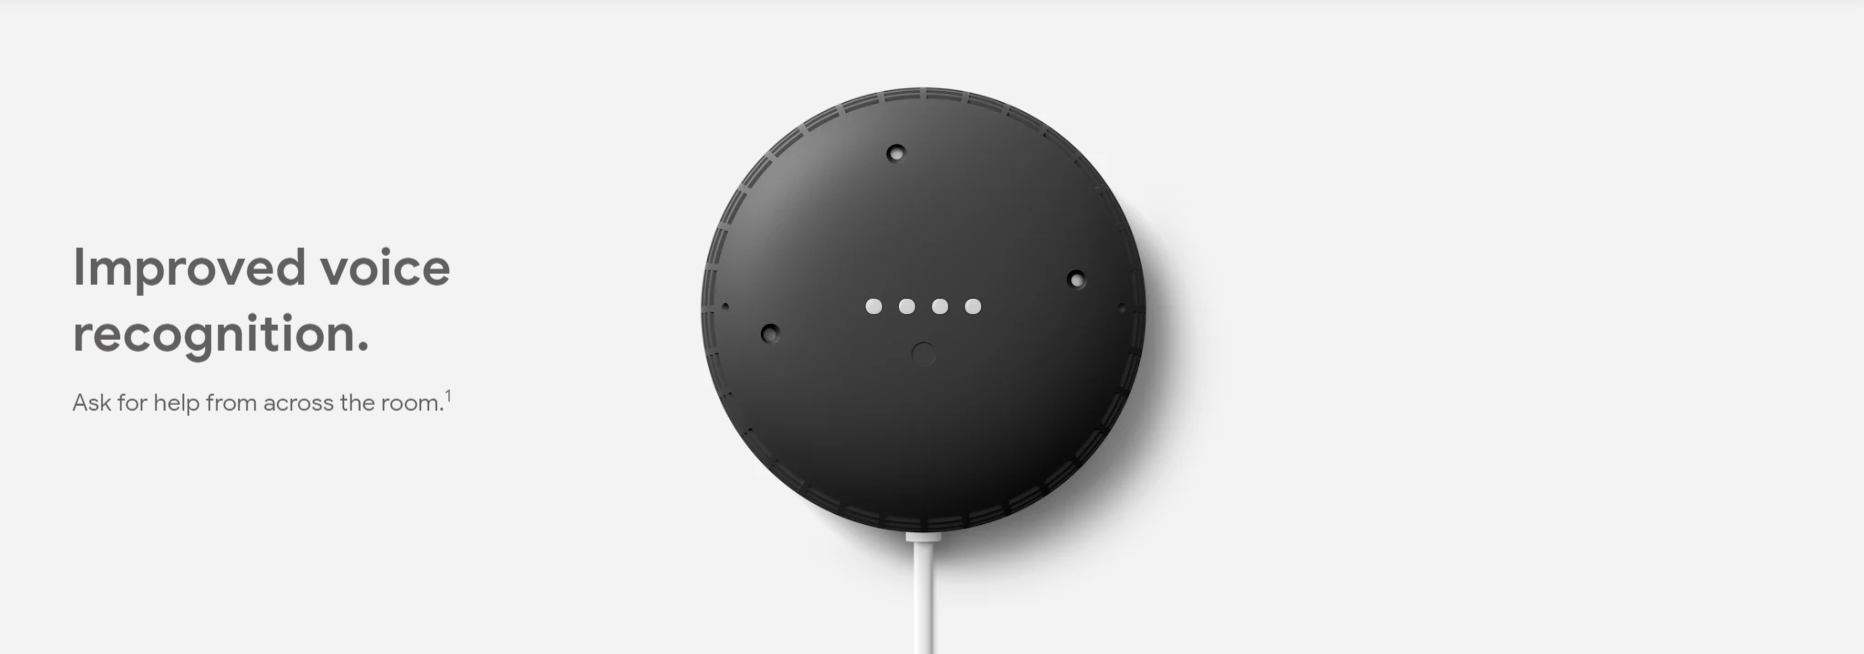 google-nest-improved-voice-recognition